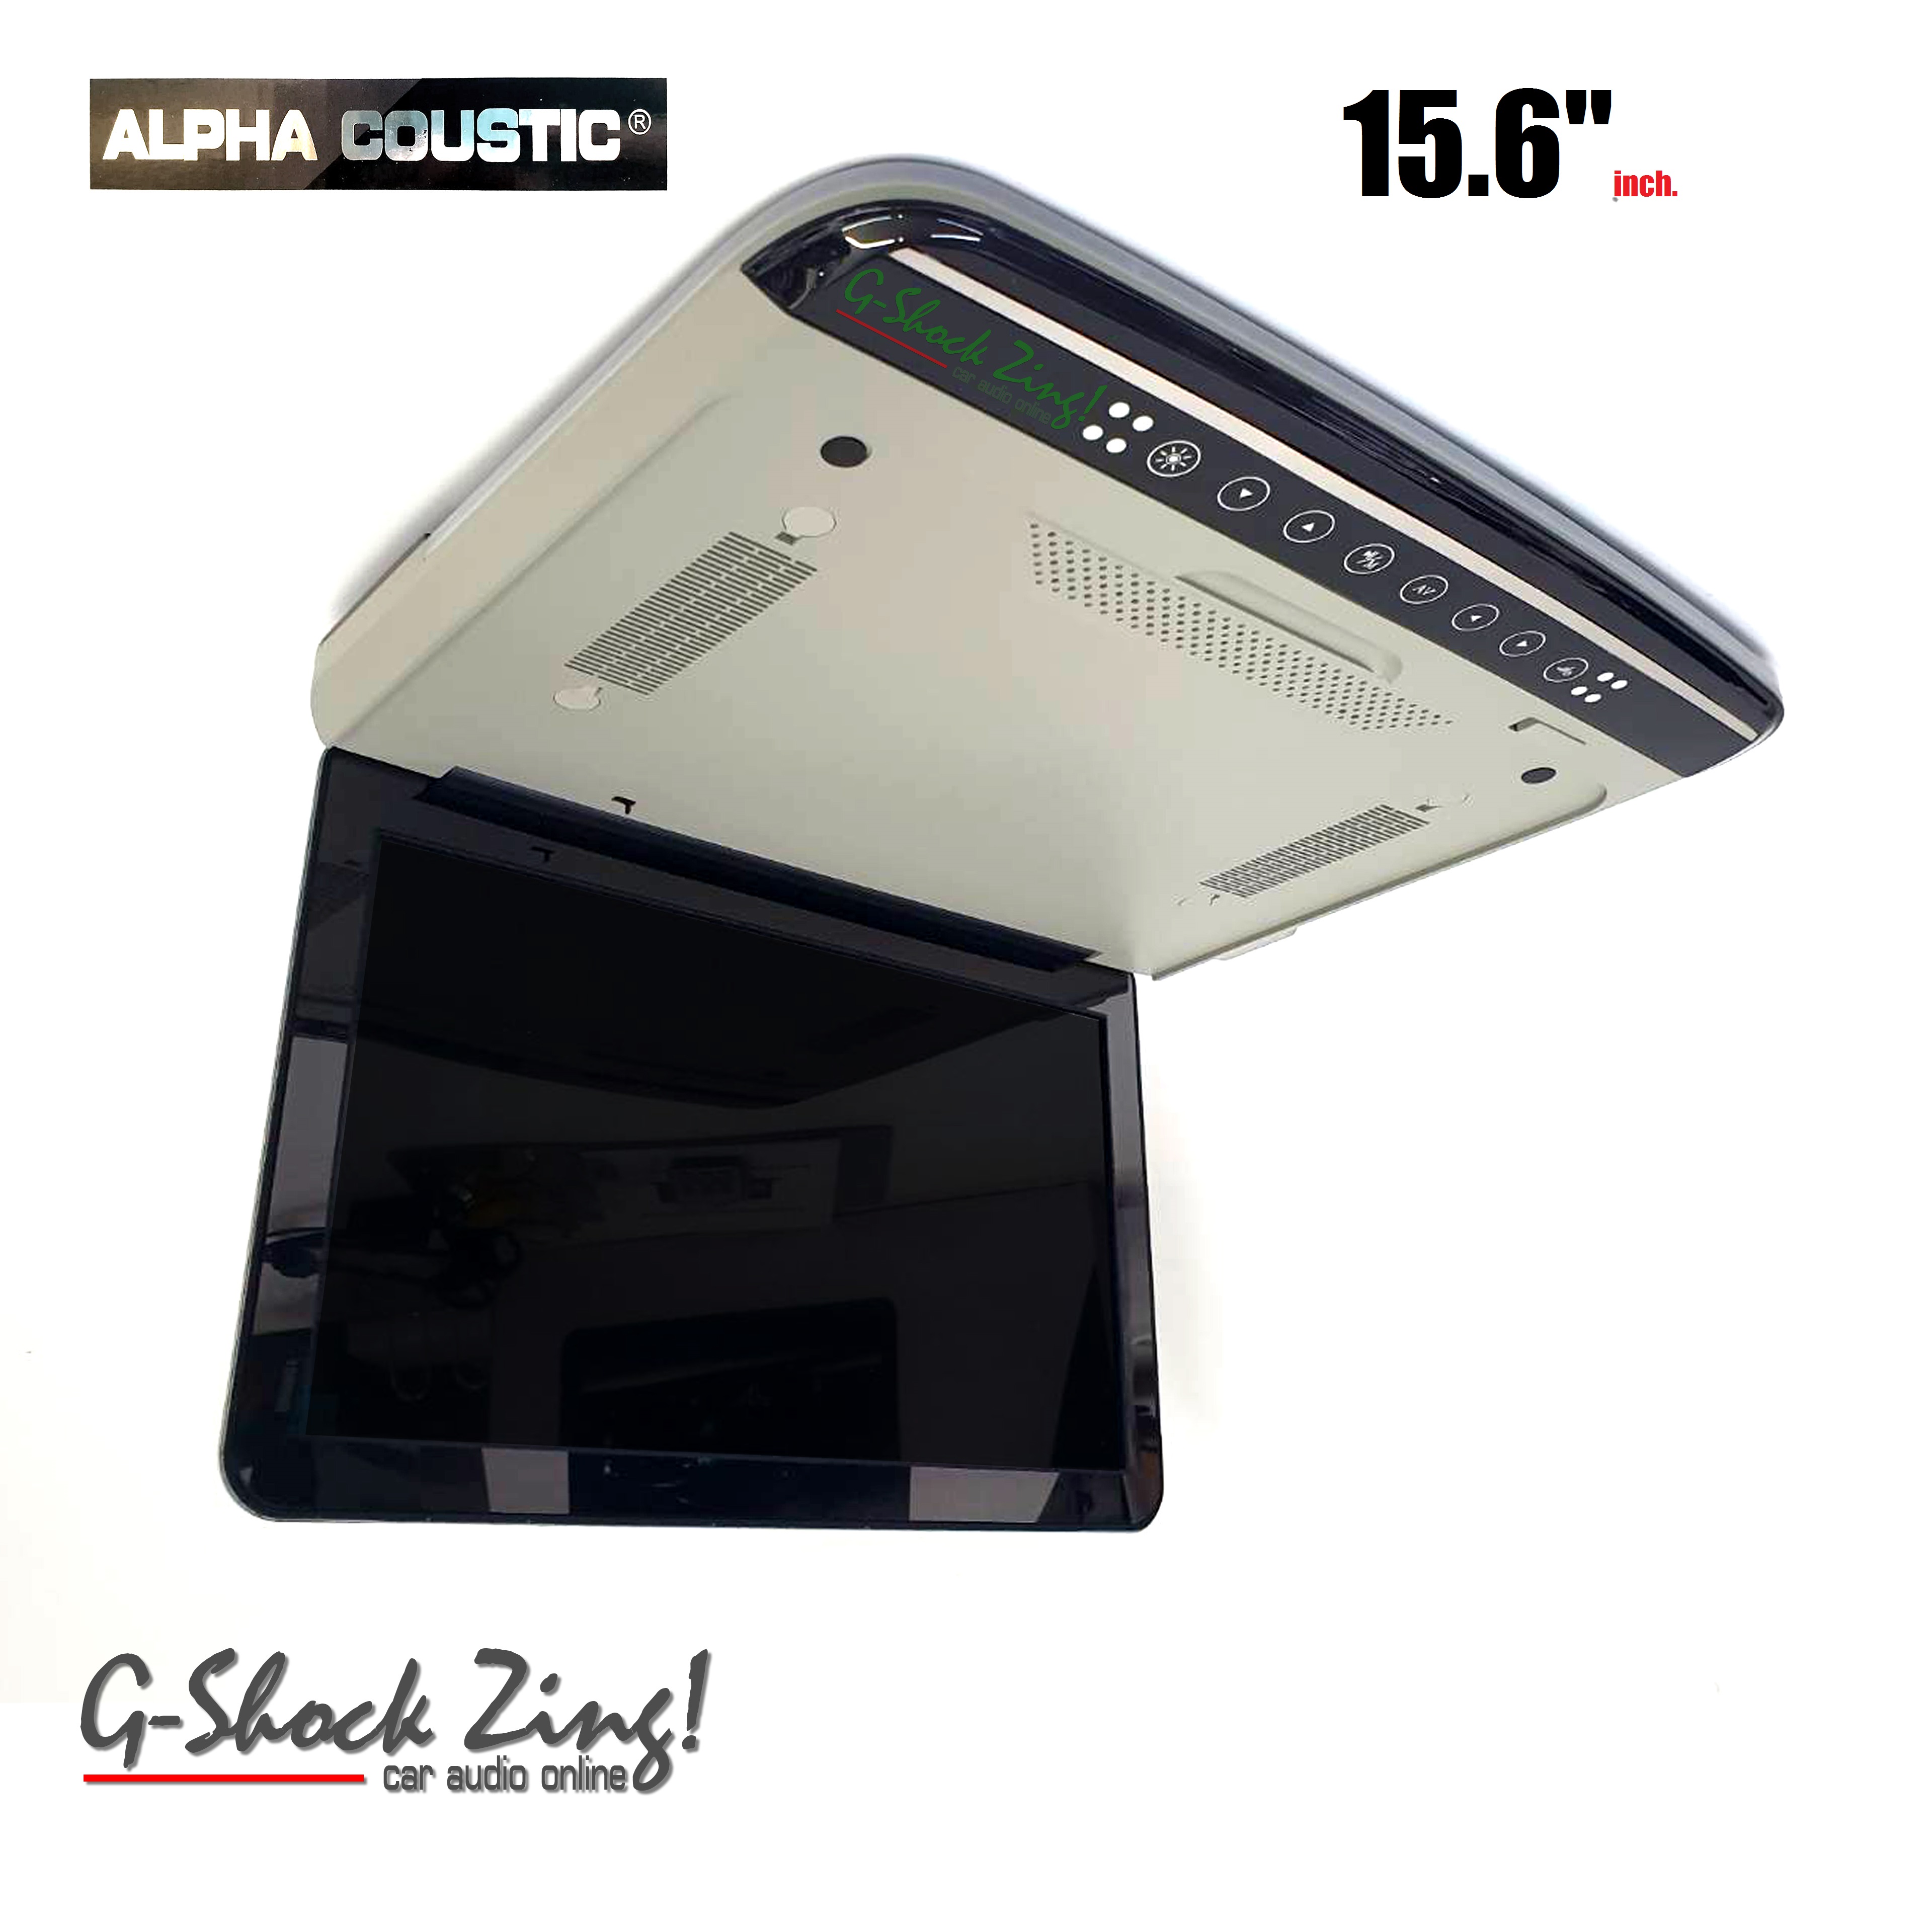 ALPHA COUSTIC Roofmount Monitor เครื่องเสียงรถยนต์ จอเพดานรถยนต์ จอติดรถยนต์ จอเพดาน15.6นิ้ว HDMI IN /USB SLOT/SD SLOT (สี GRAY) สีเทา